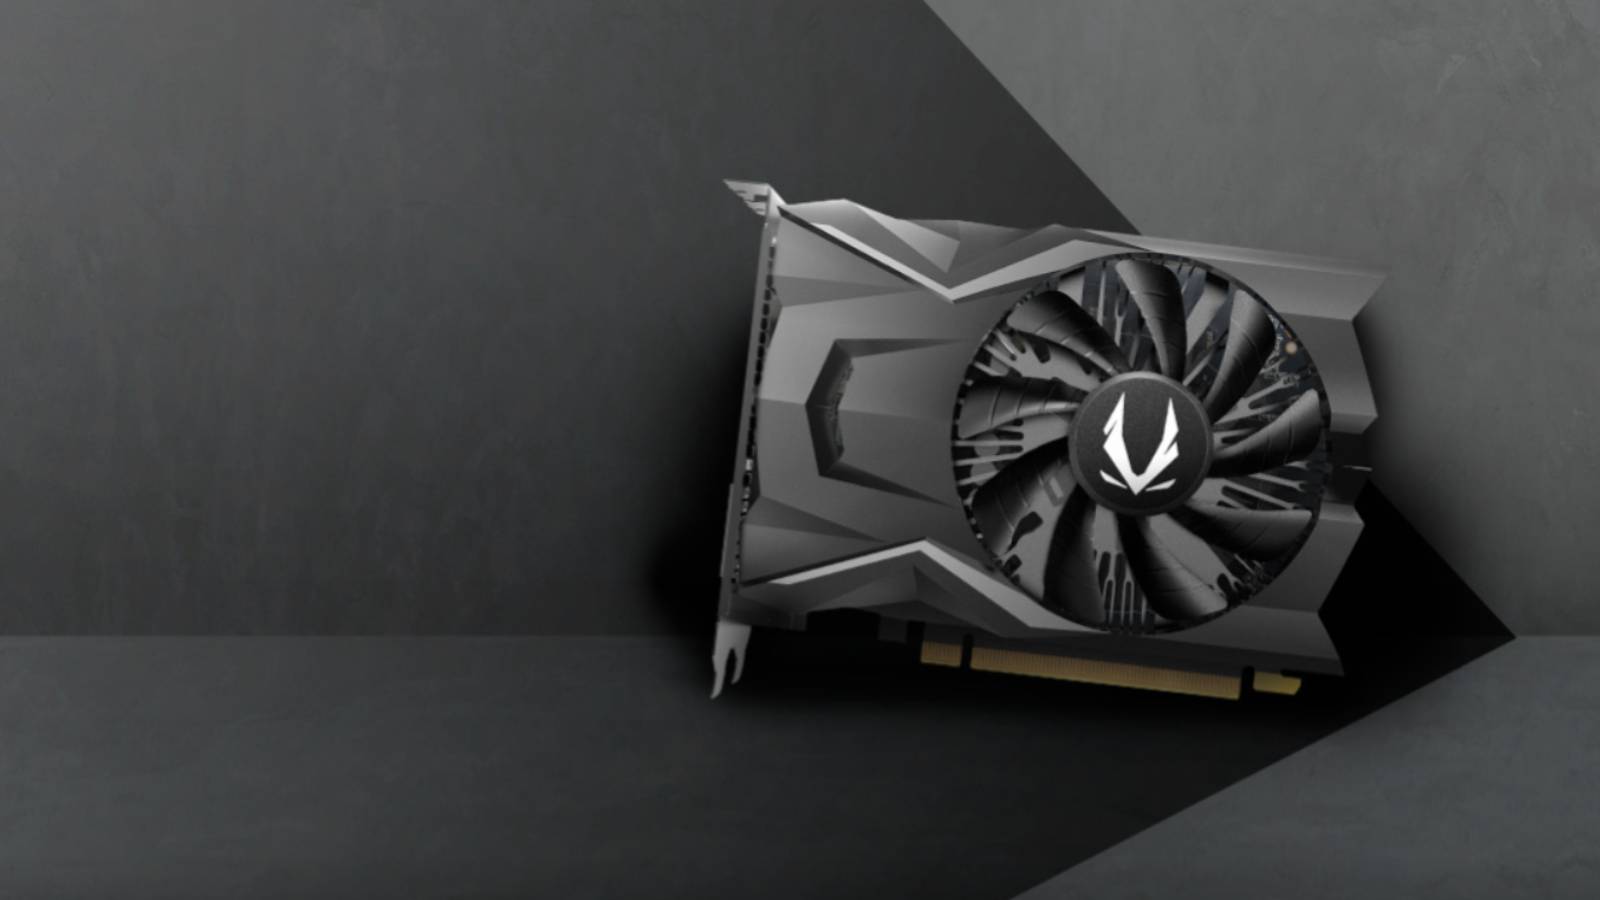 An image featuring Zotac's GTX 1630 GPU